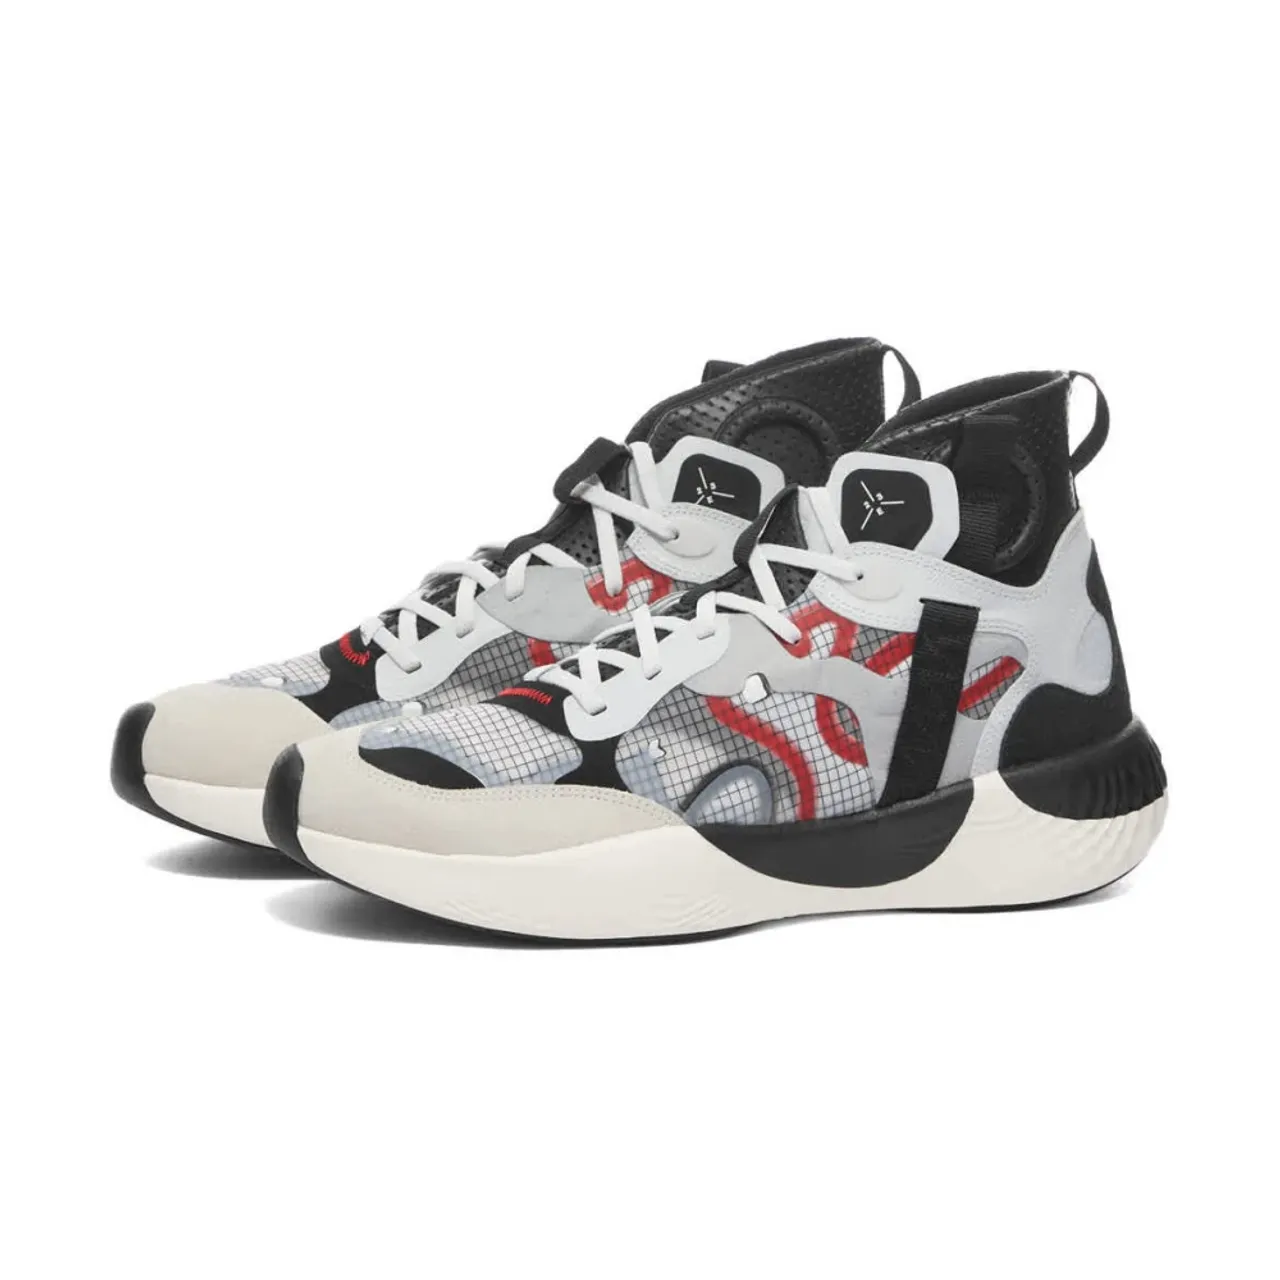 Delta 3 SP Sneakers in Sail/Black-University Red-Grey Nike